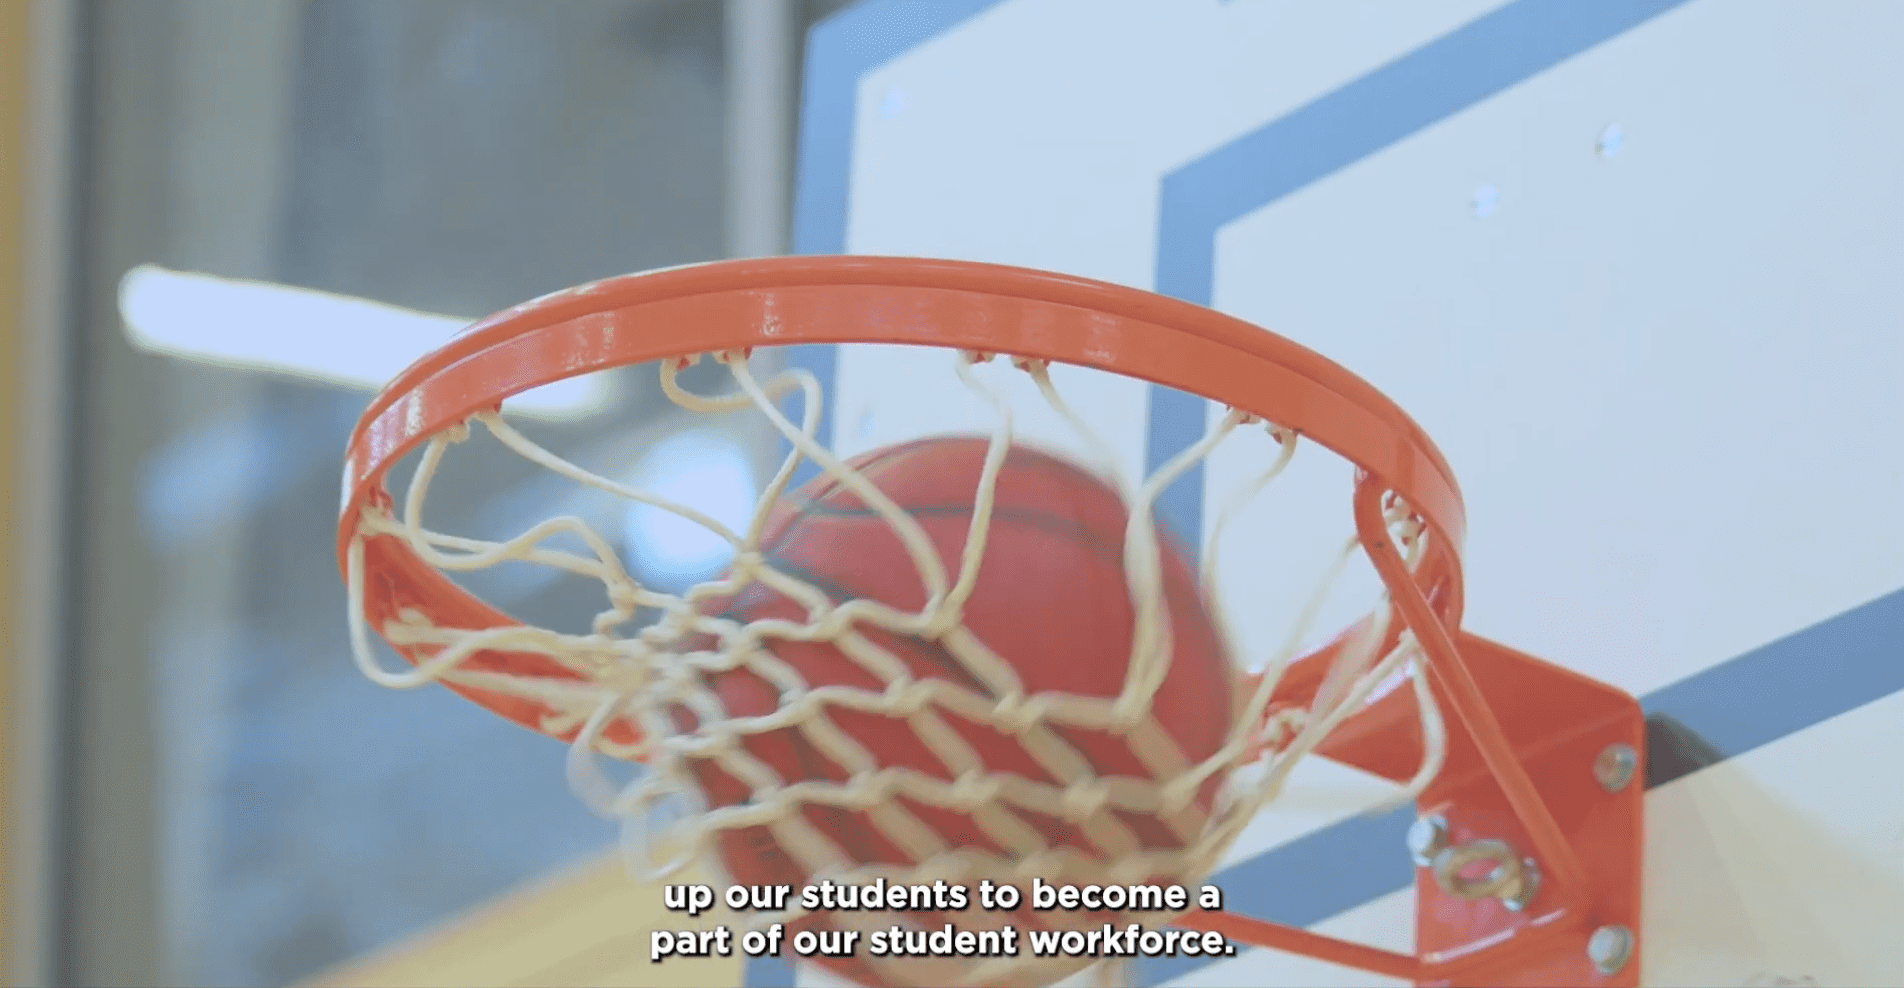 basketball going through a hoop in indoor hall